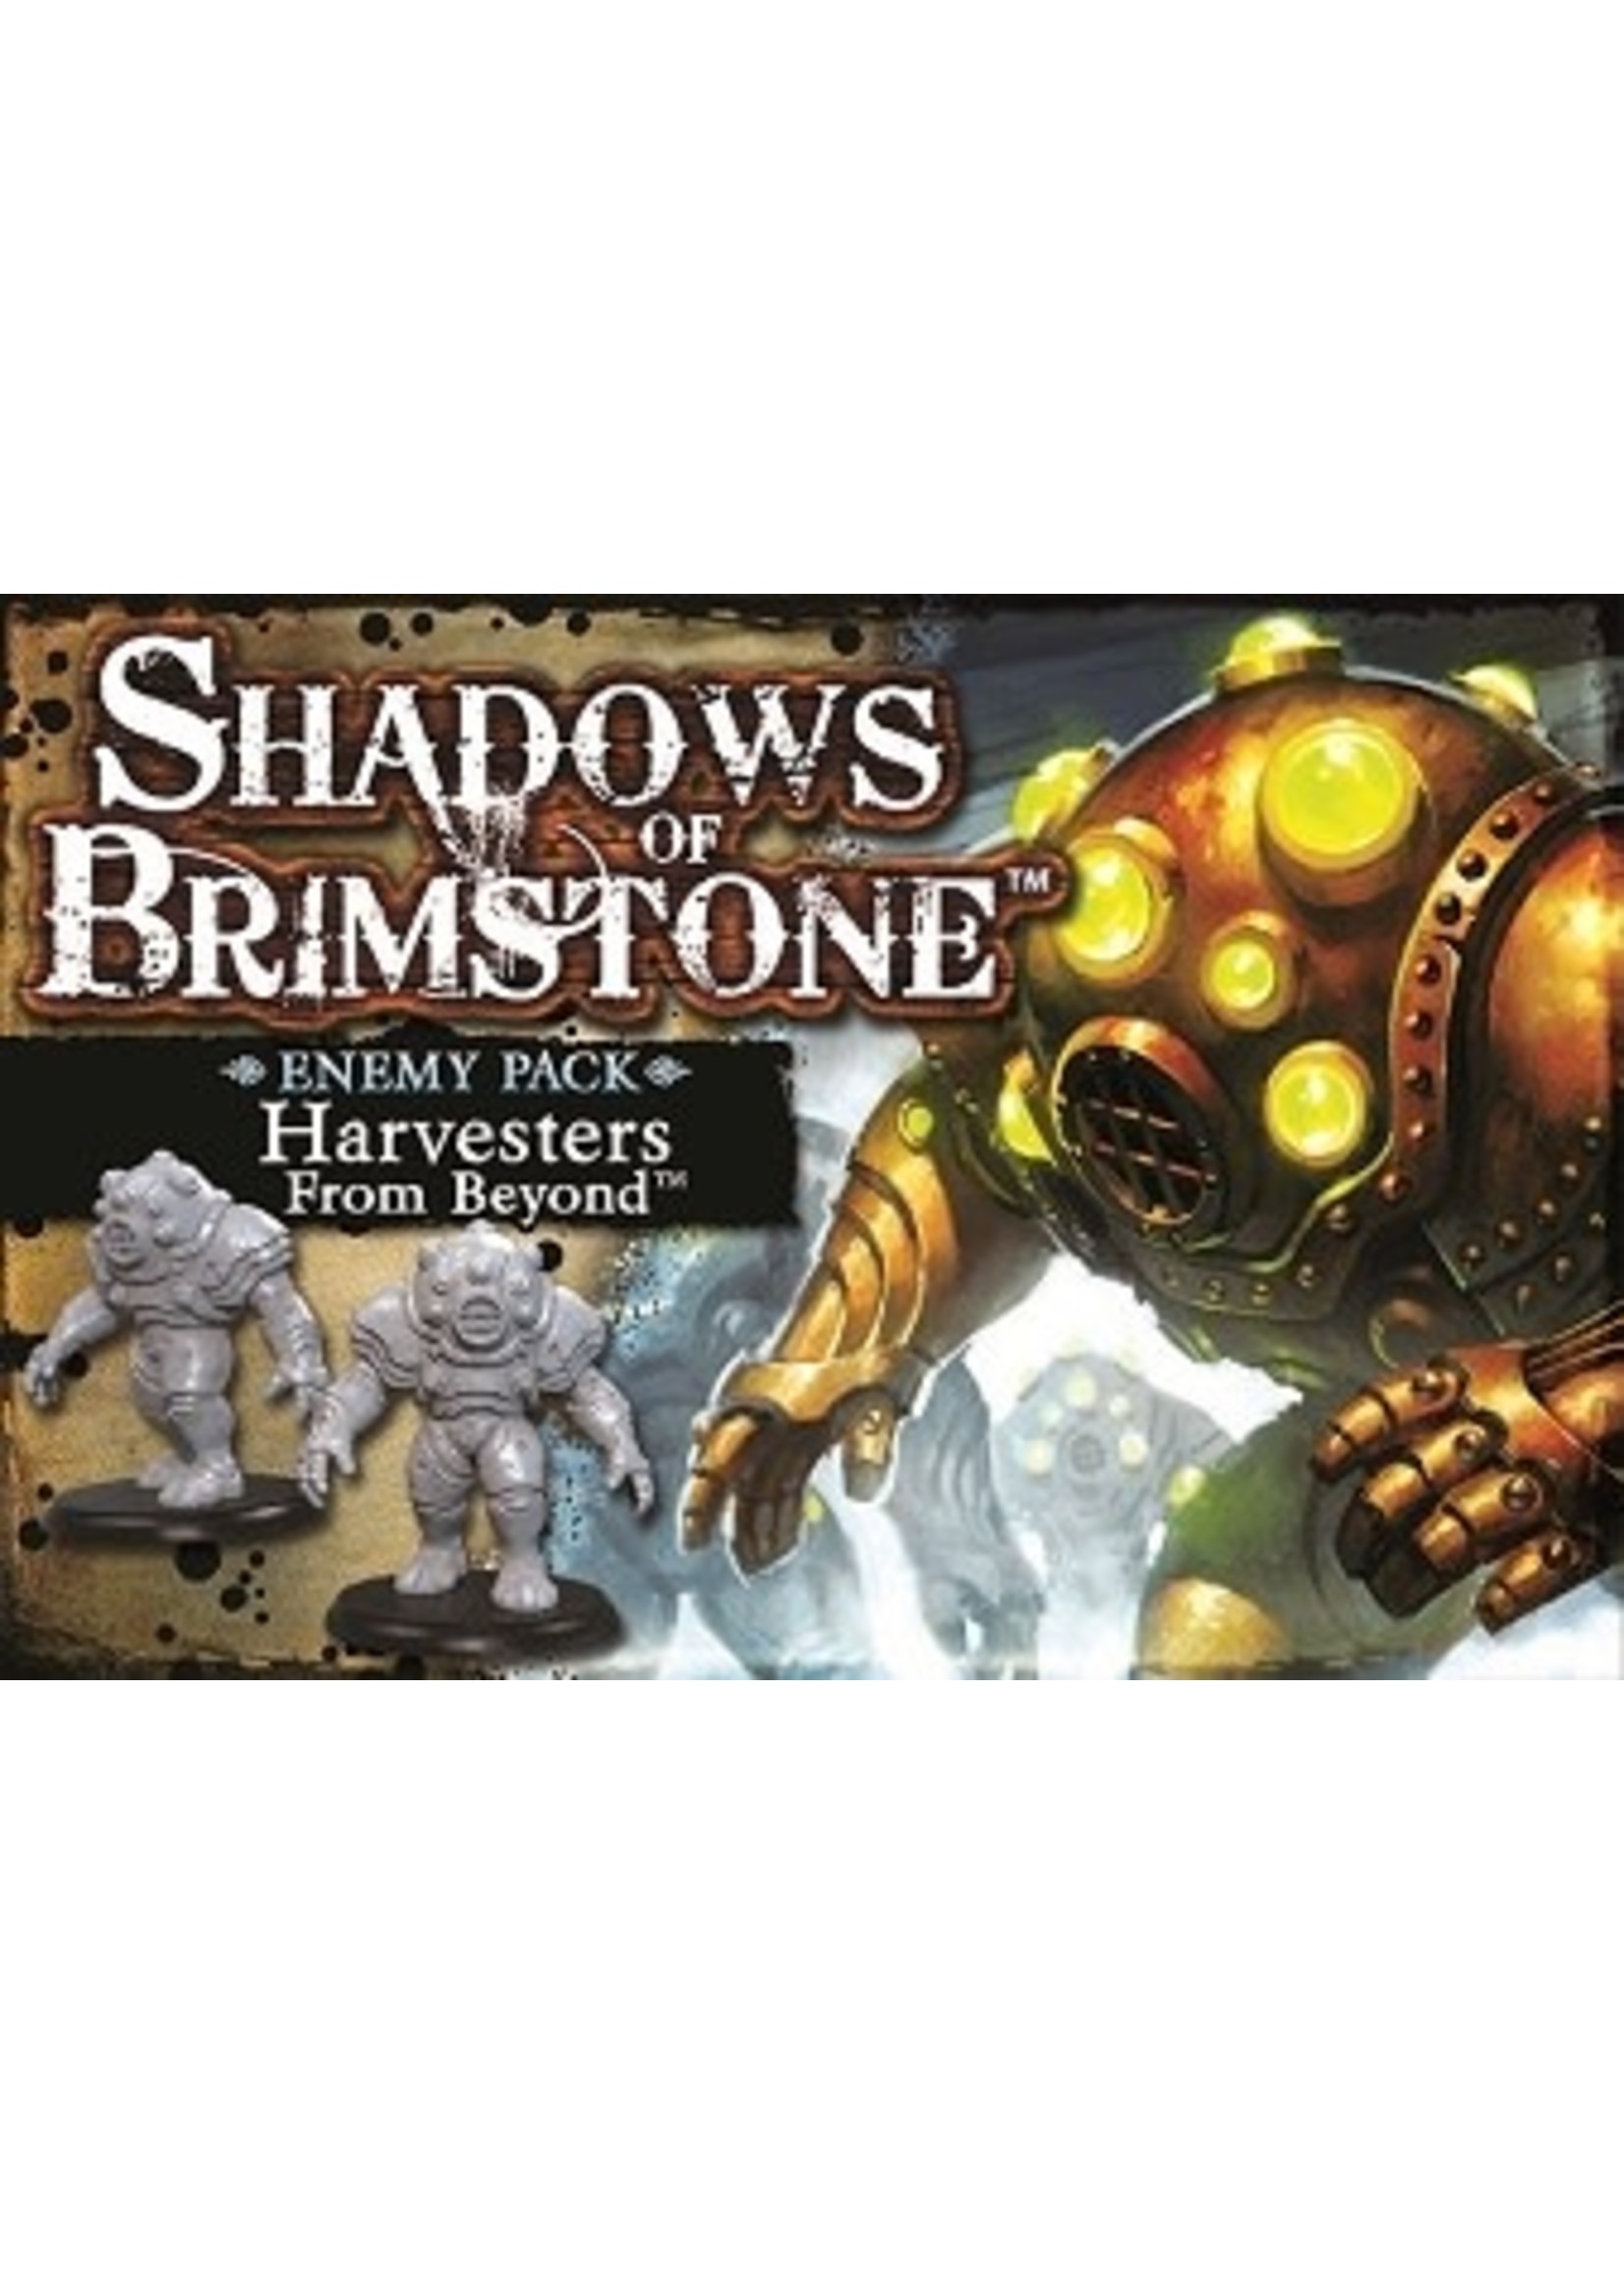 Flying Frog Harvesters from Beyond - Enemy Pack - Shadows of Brimstone